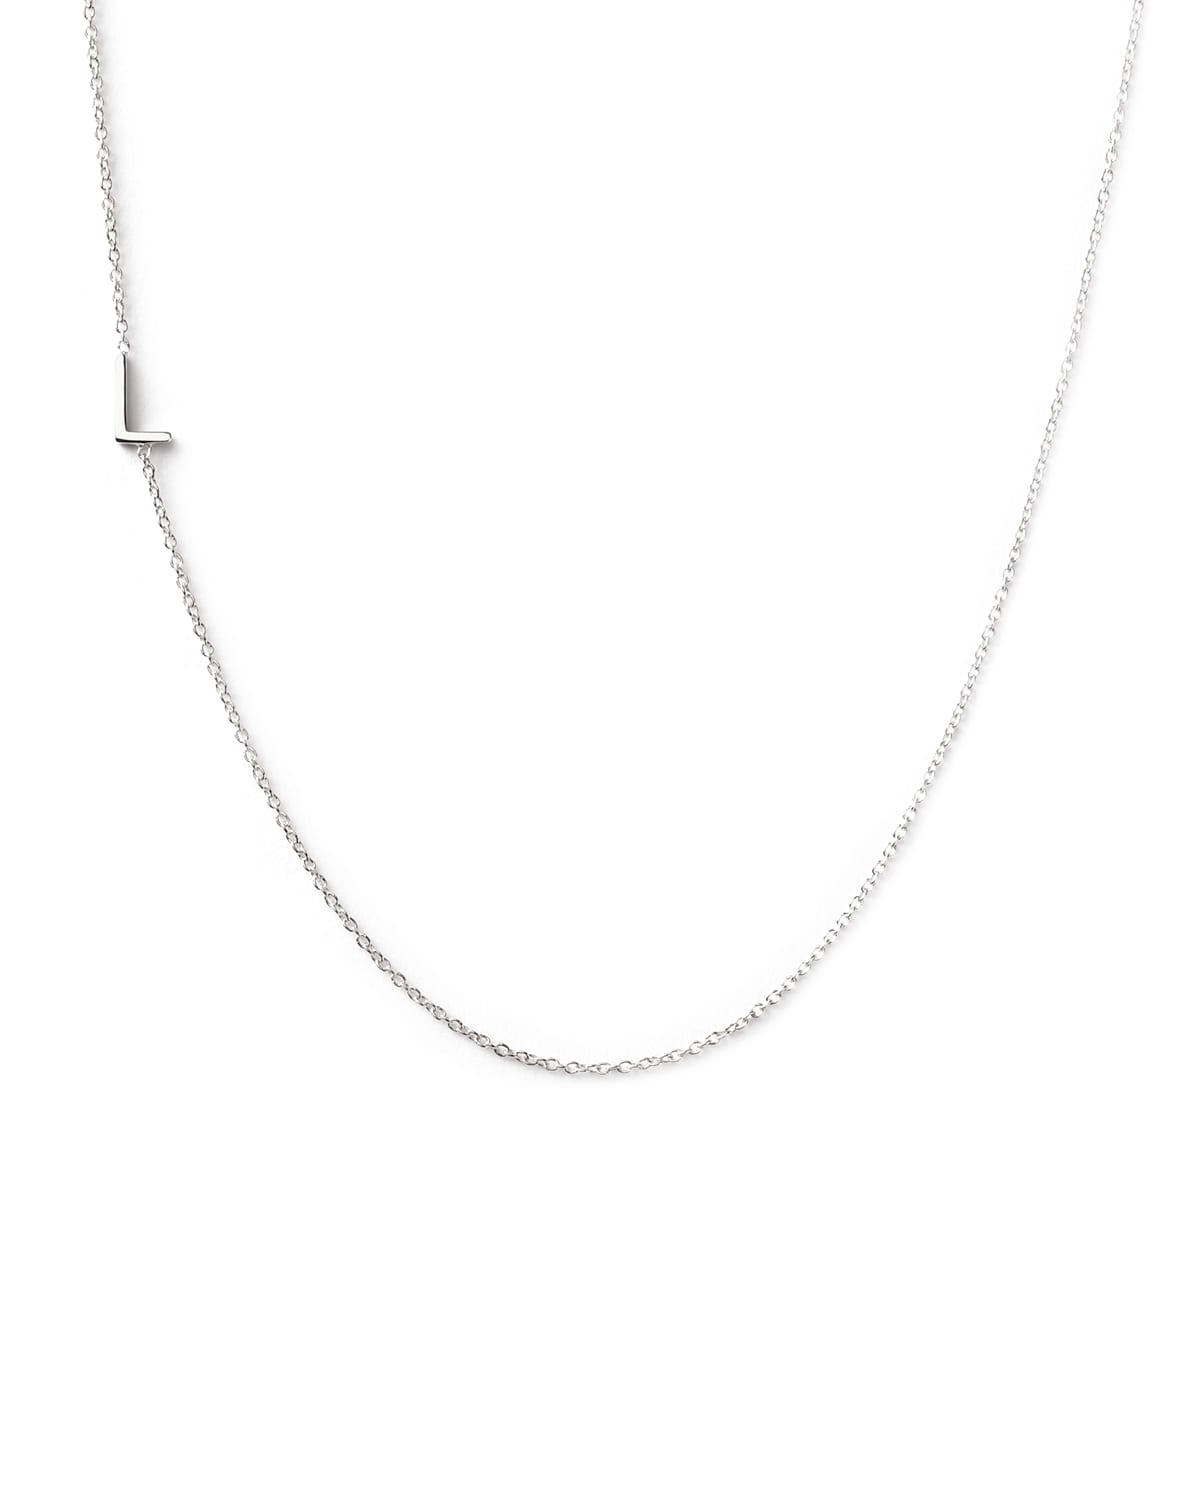 Maya Brenner Designs 14k White Gold Mini Letter Necklace